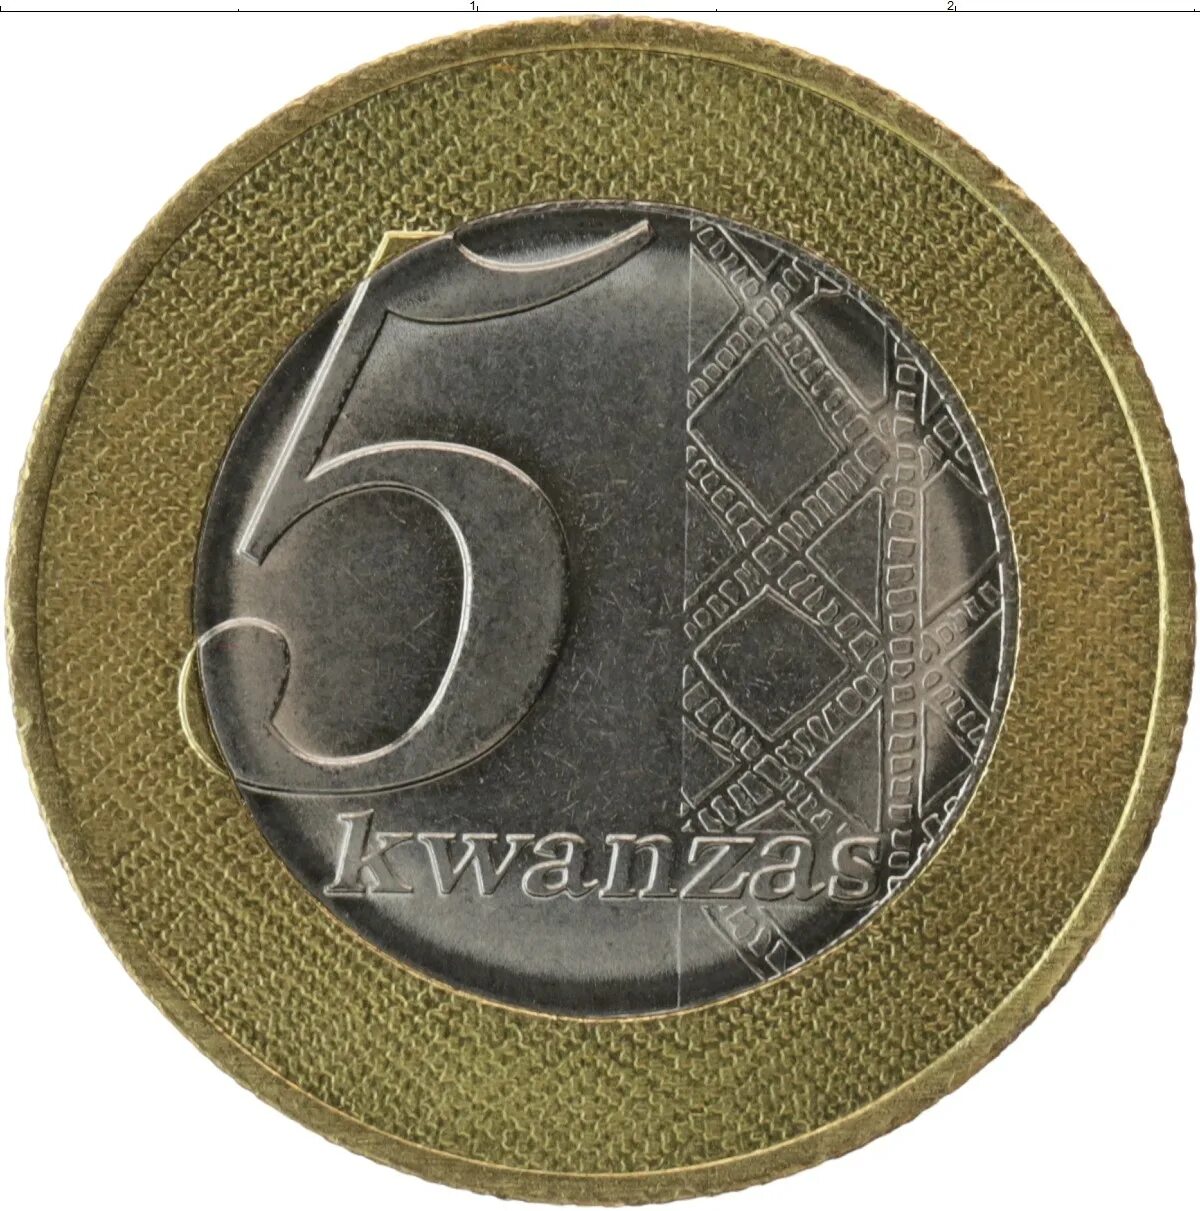 Ангола 5 кванз 2012 год - UNC. 20 от 110 рублей